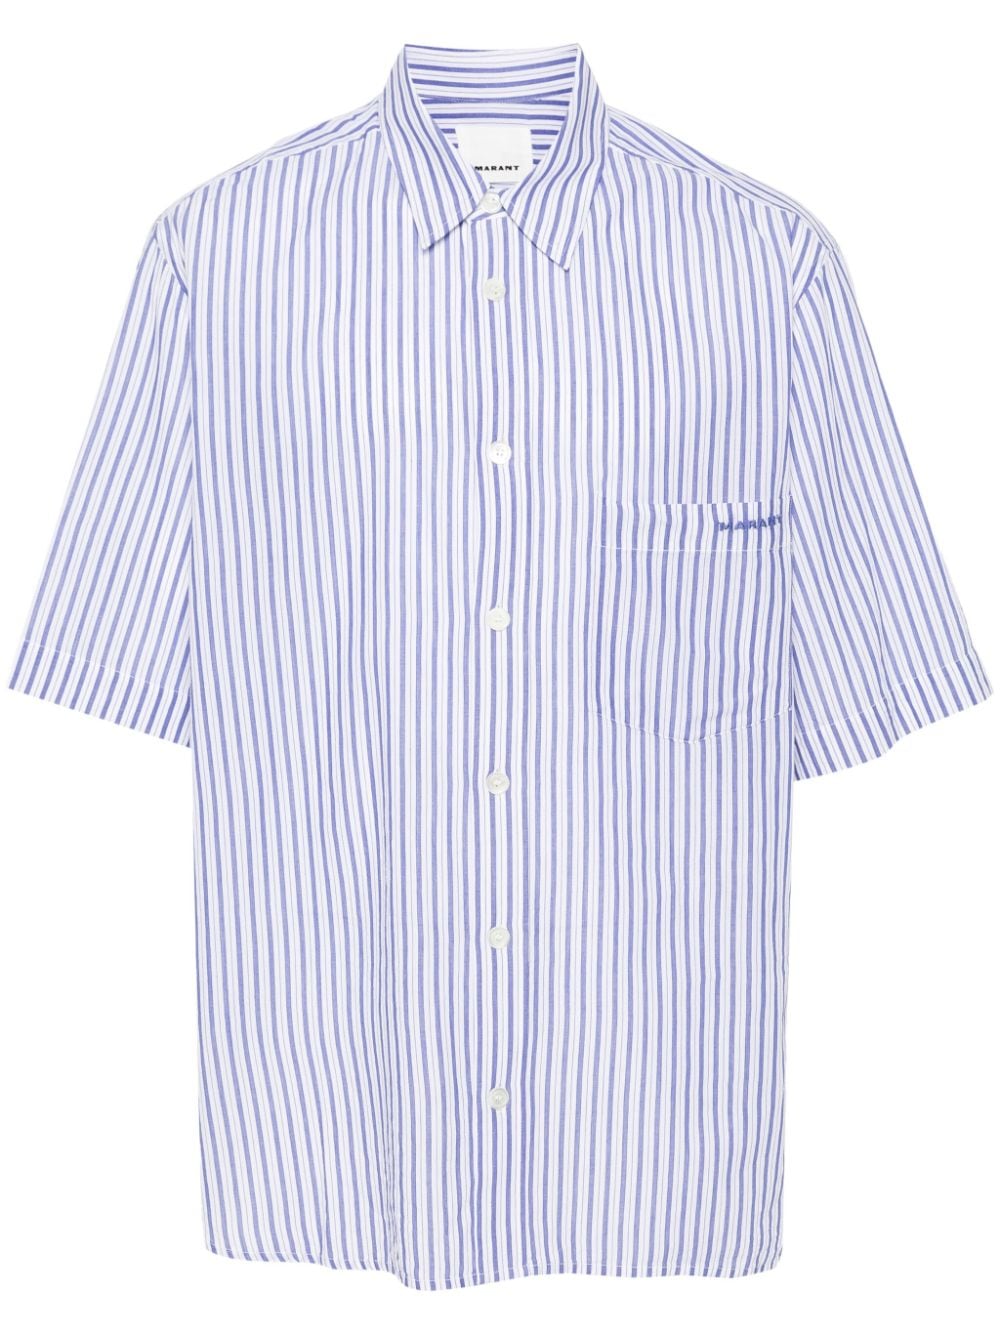 MARANT Labilio striped cotton shirt - Blue von MARANT